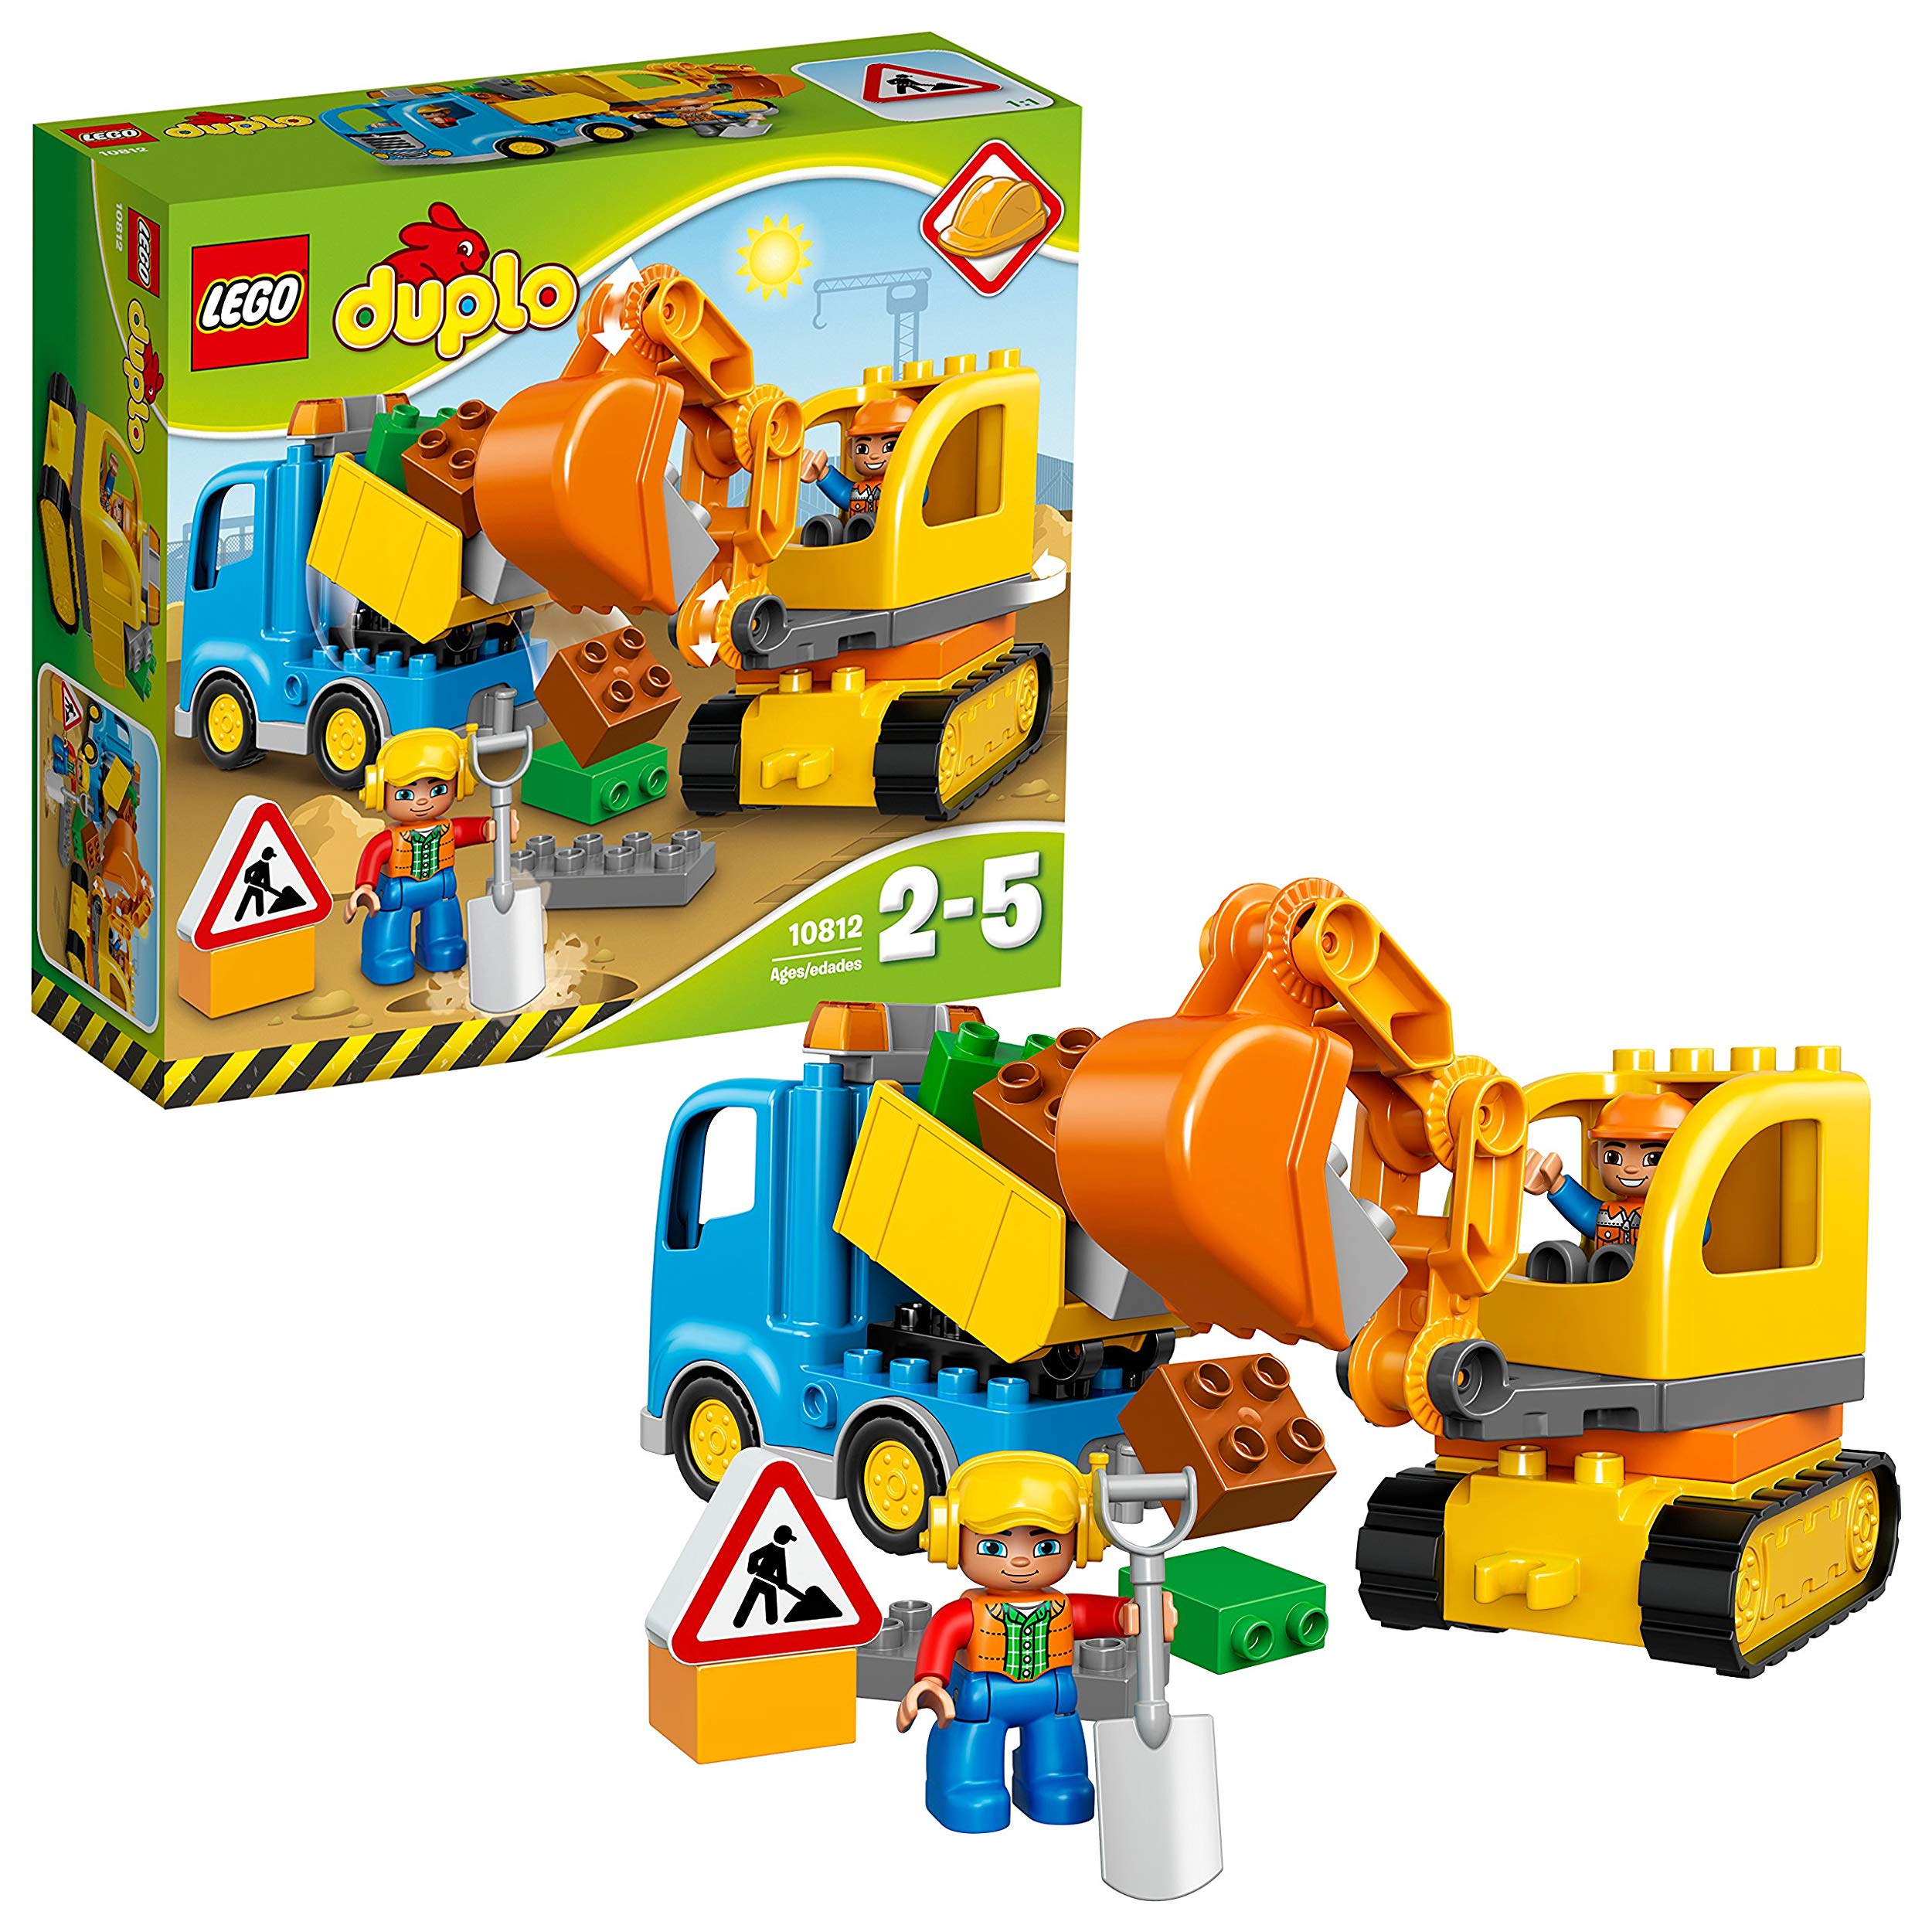 Lego Excavator And Trucks